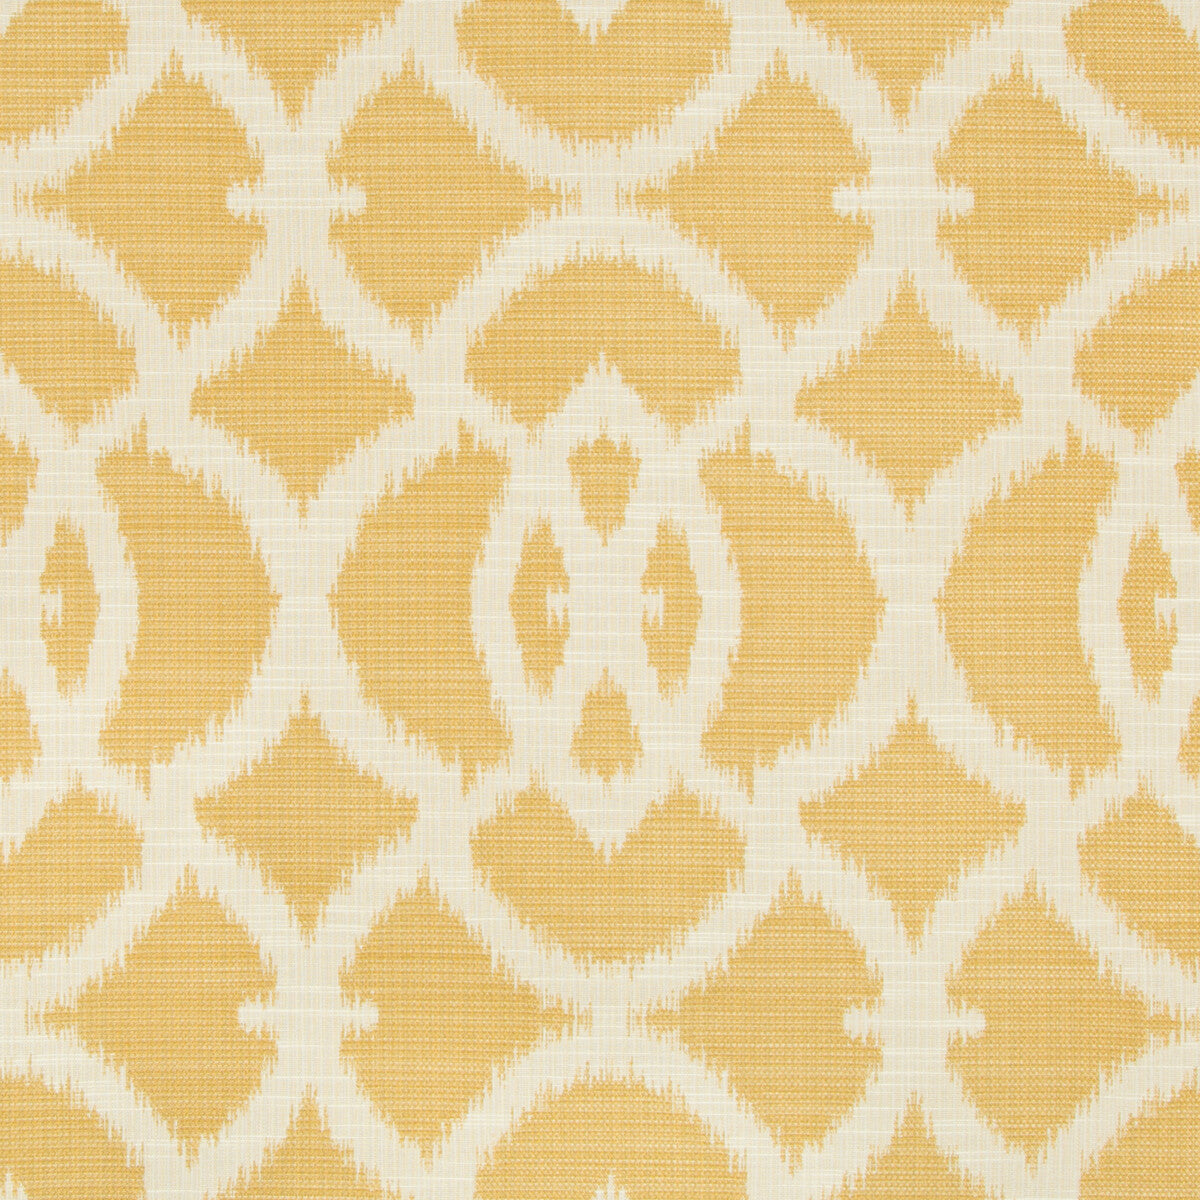 Kravet Design fabric in 34721-4 color - pattern 34721.4.0 - by Kravet Design in the Gis collection